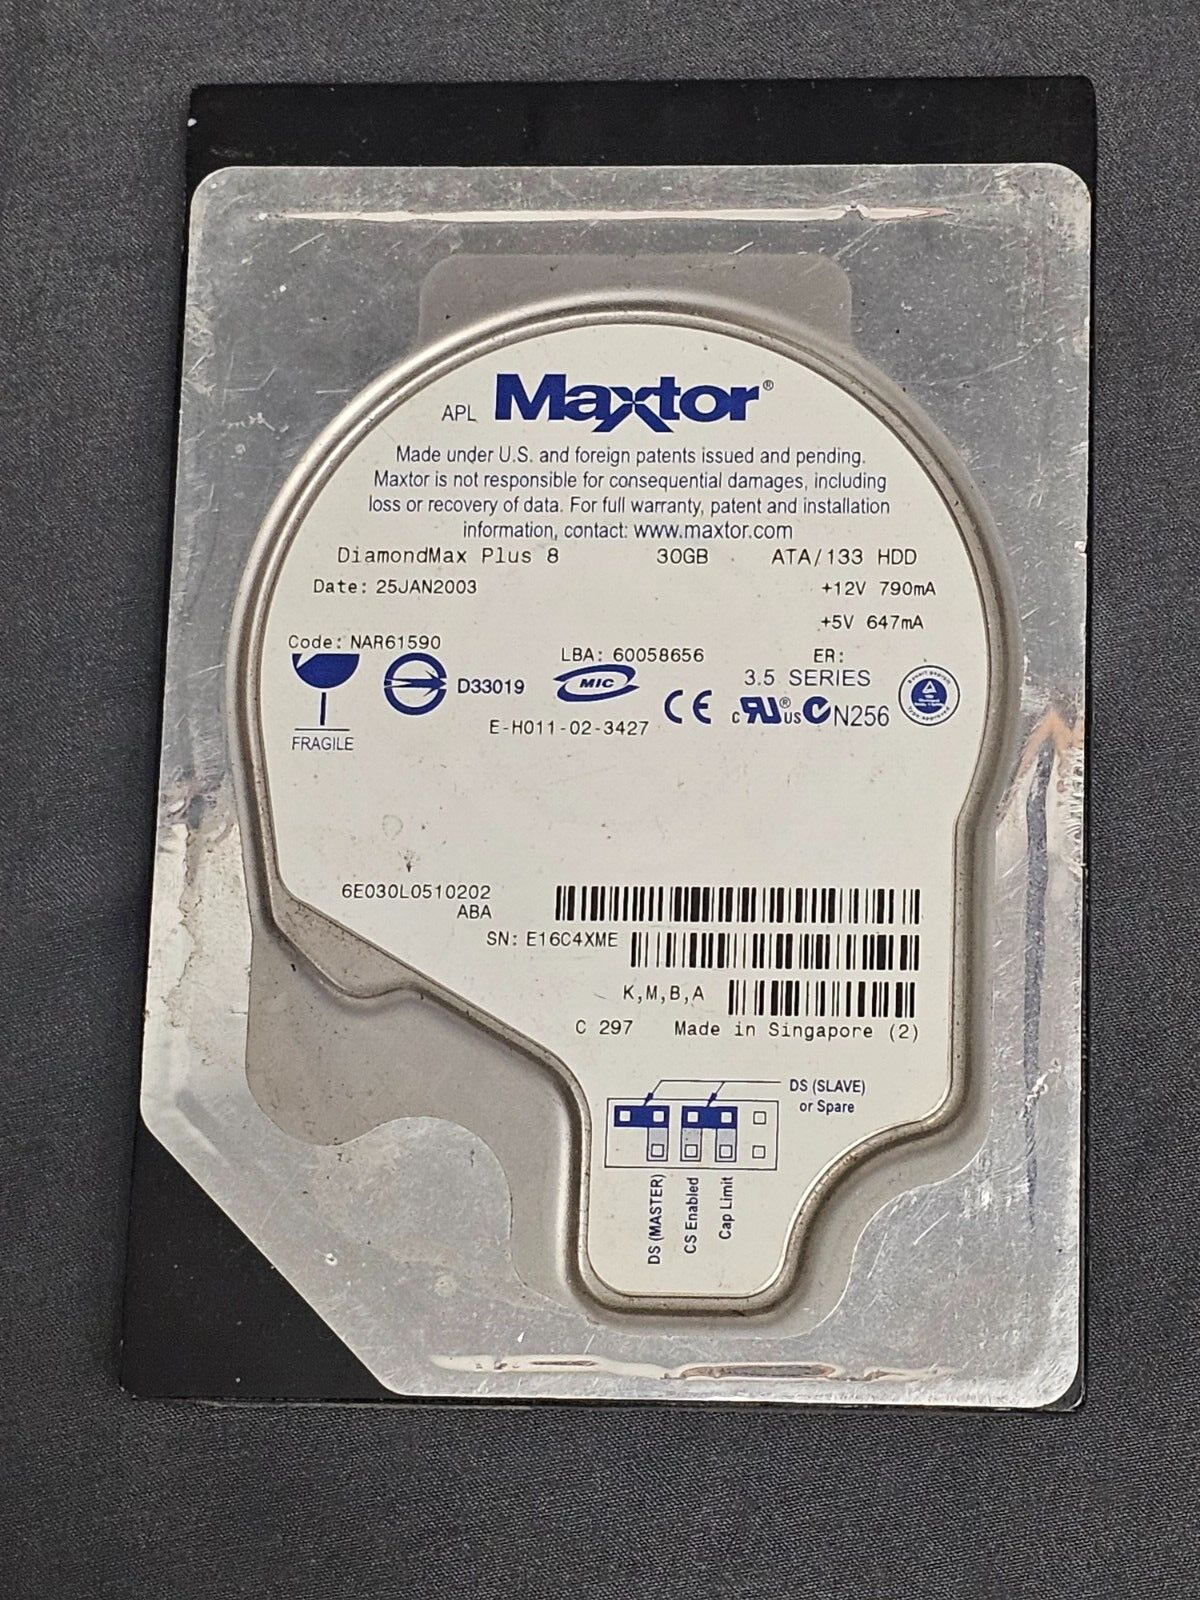 Maxtor DiamondMax 8 Plus E-H011-02-3427 3.5